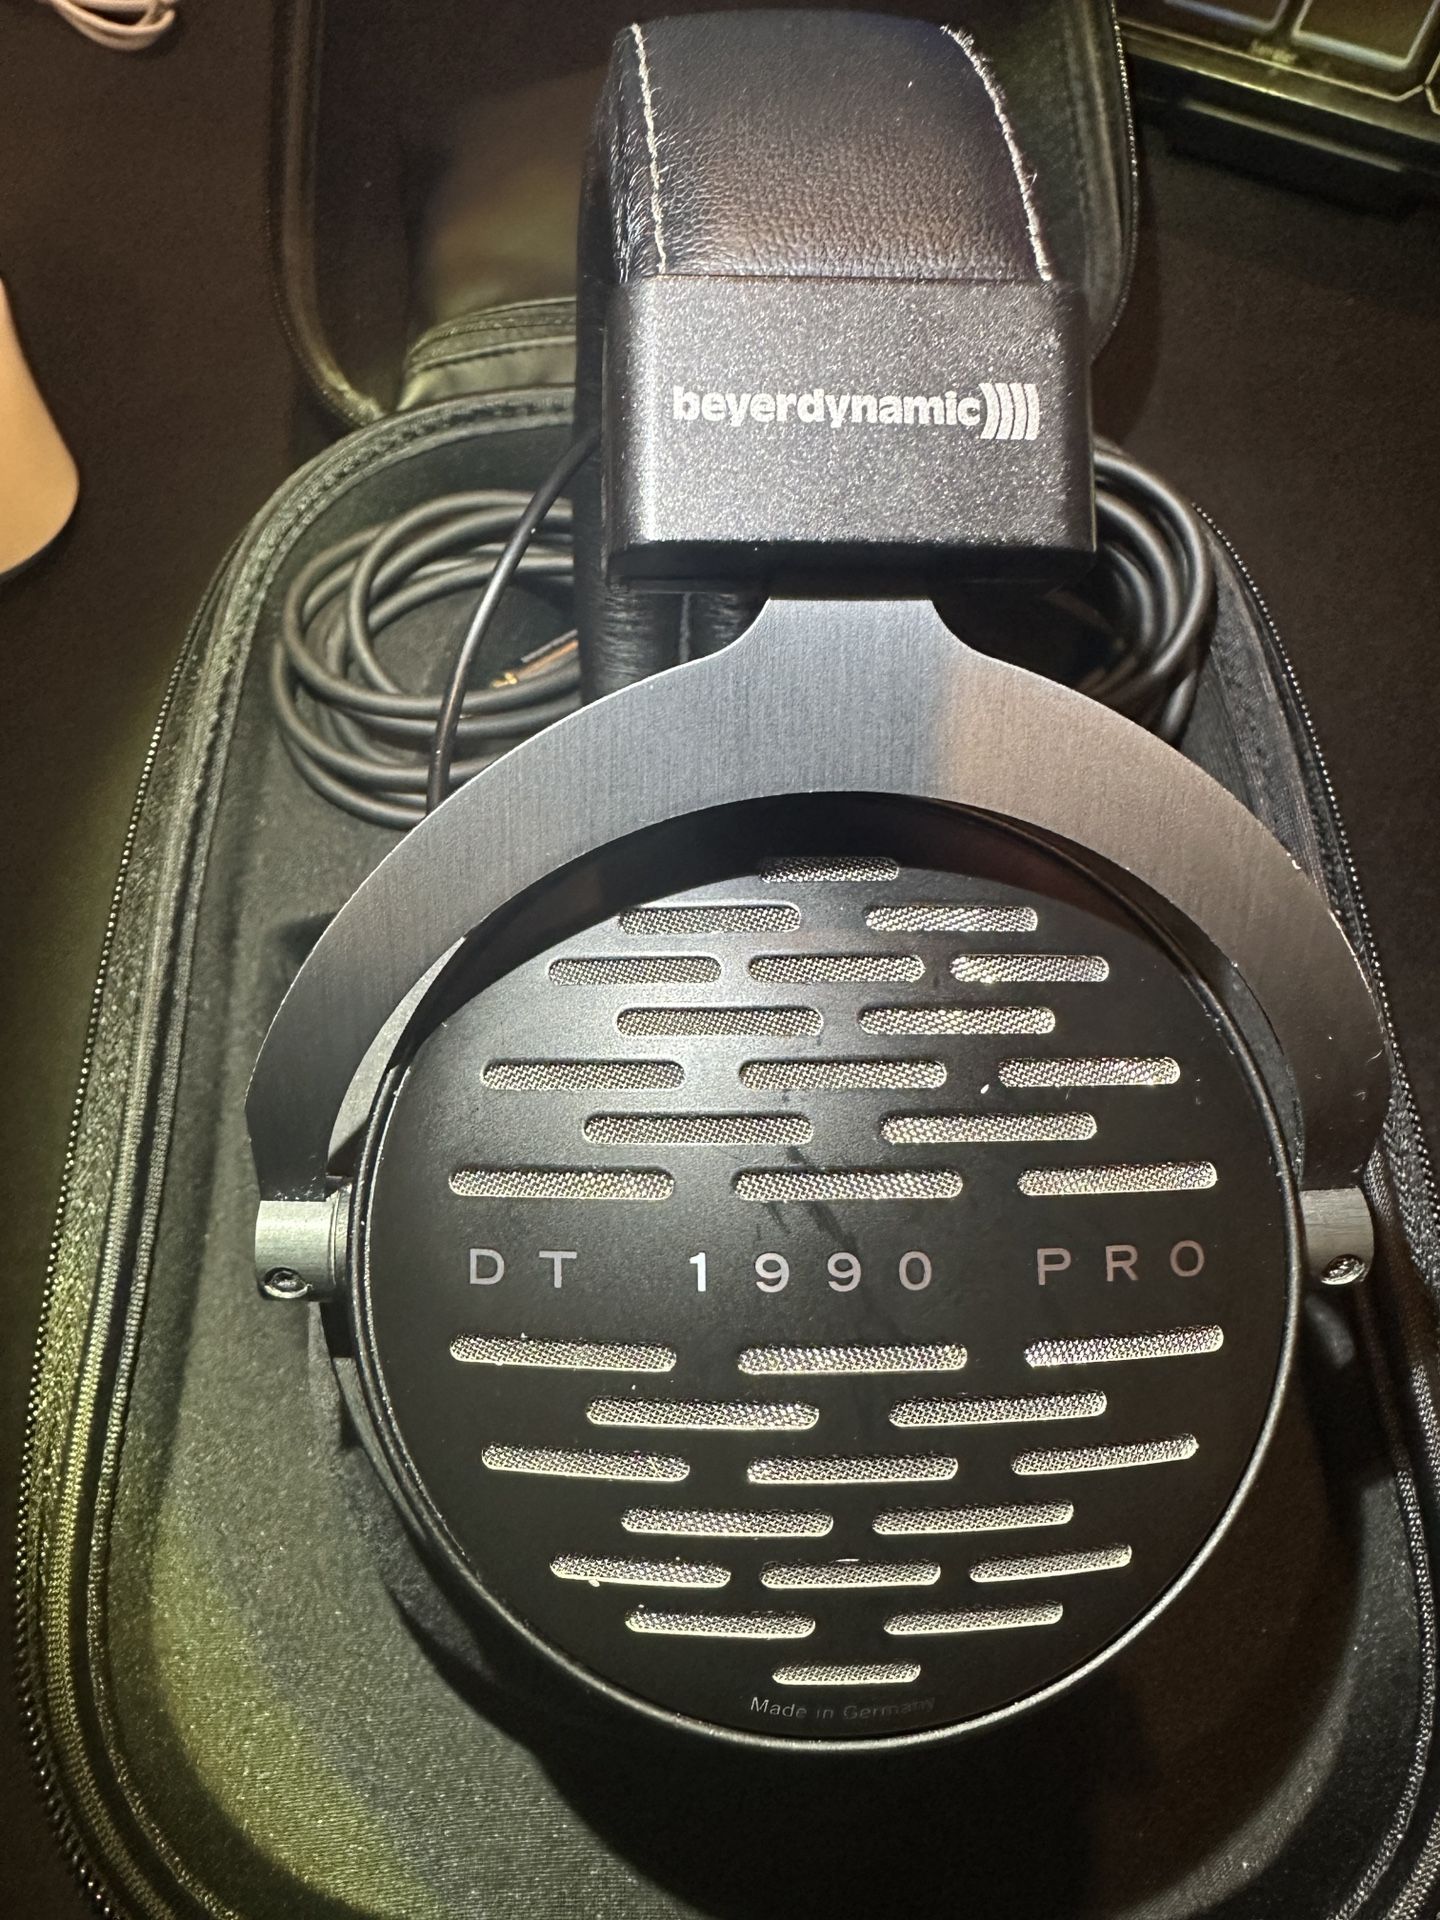 Beyerdynamic DT 1990 Headphones